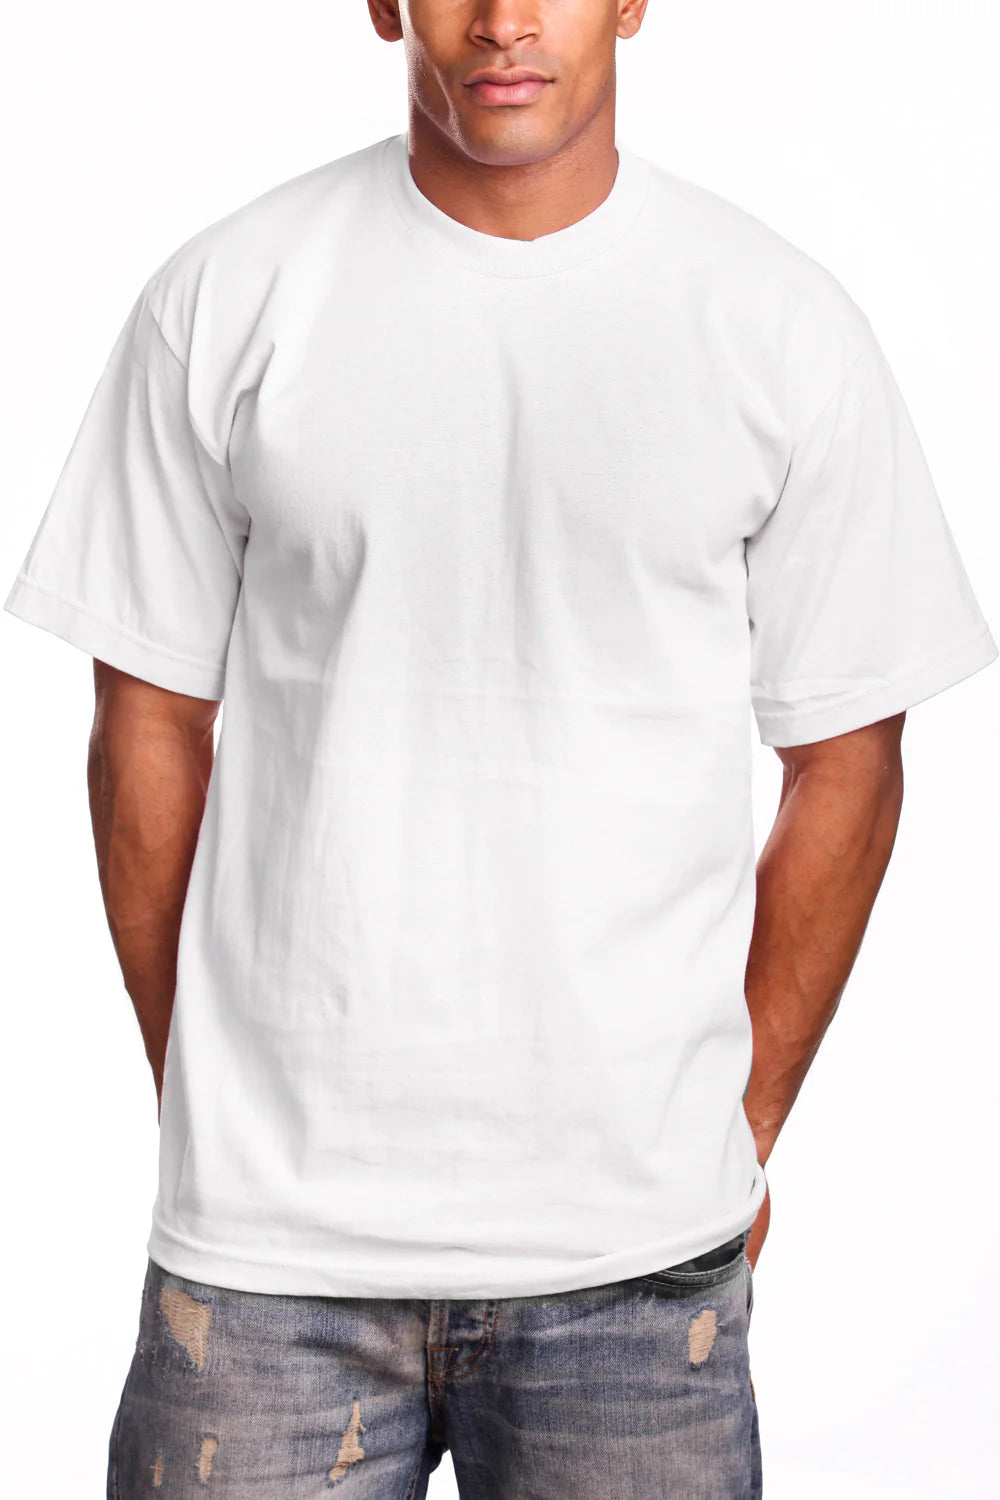 Pro 5 Super Heavy T-Shirt